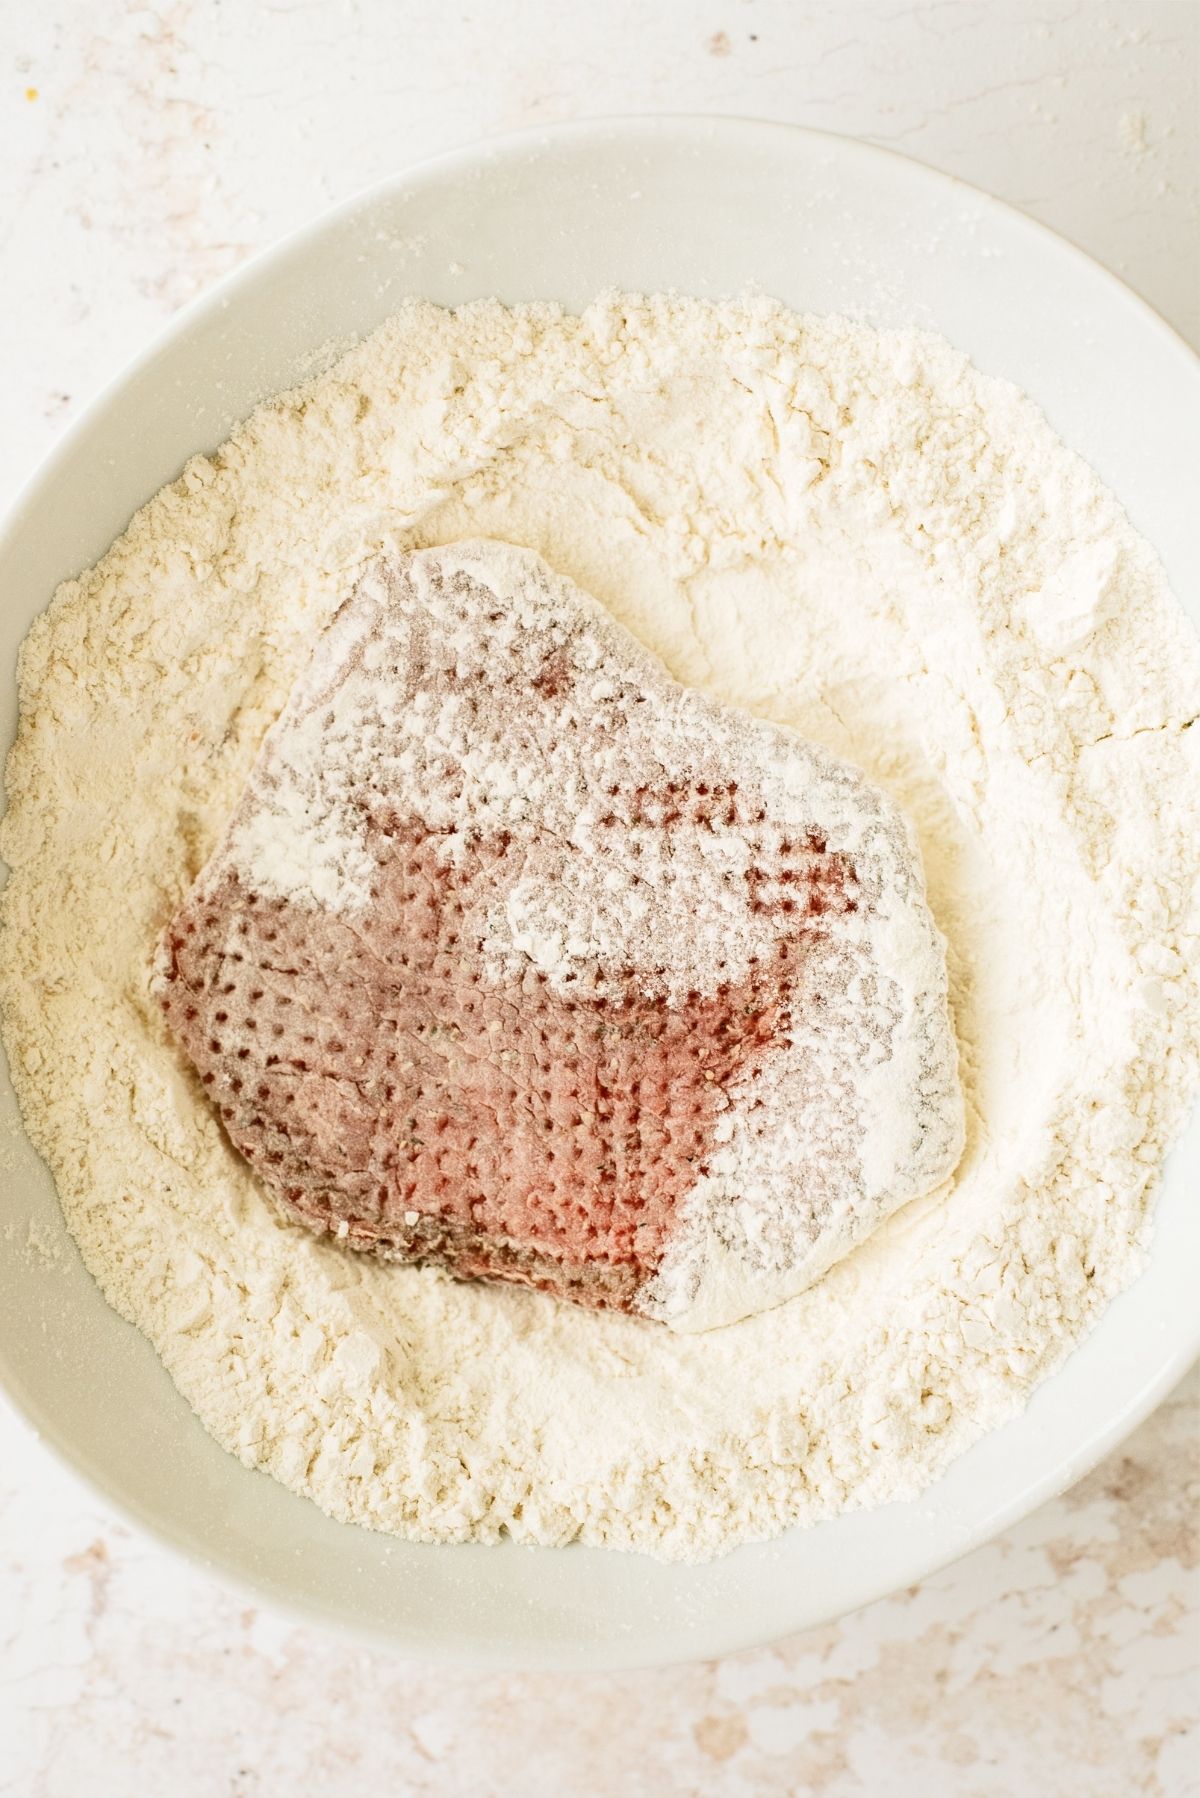 Tenderized meat dredged in flour